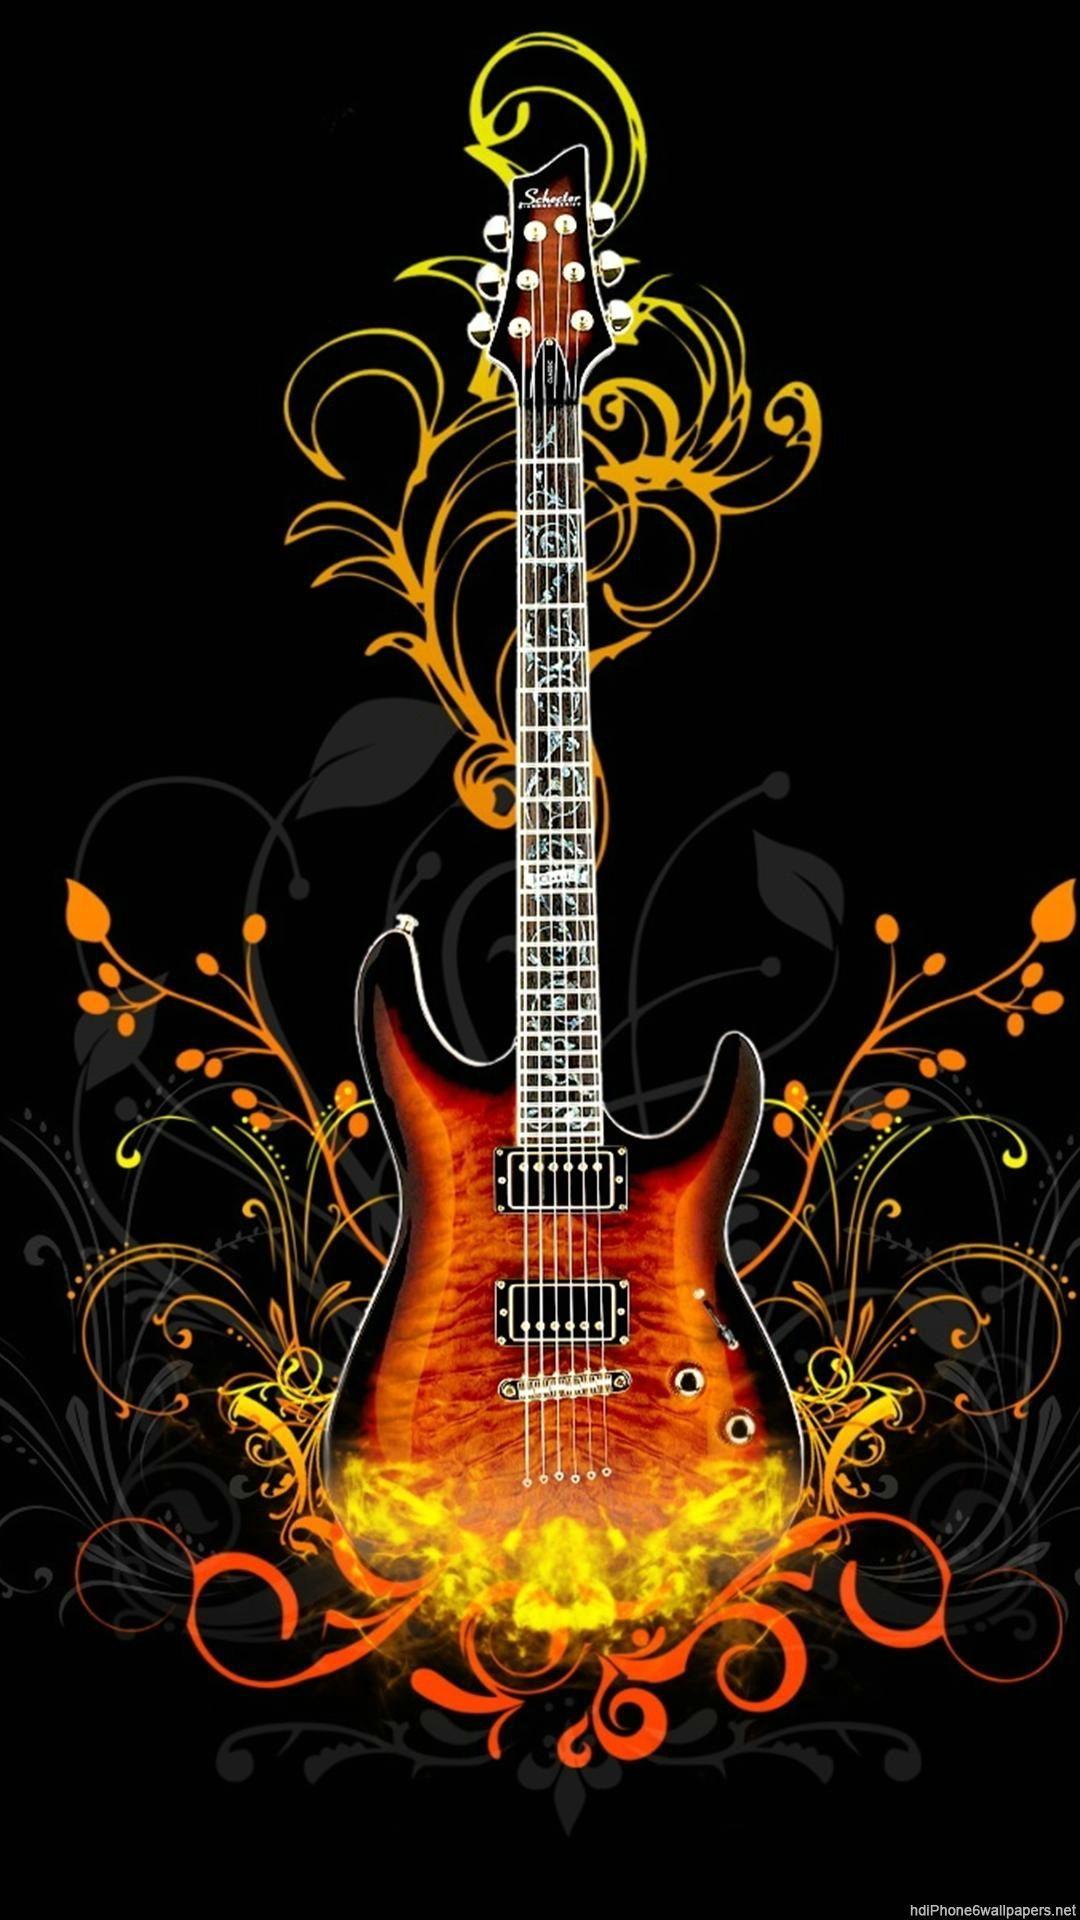 3D Guitar Wallpaper iPhone. Guitar wallpaper iphone, Guitar art